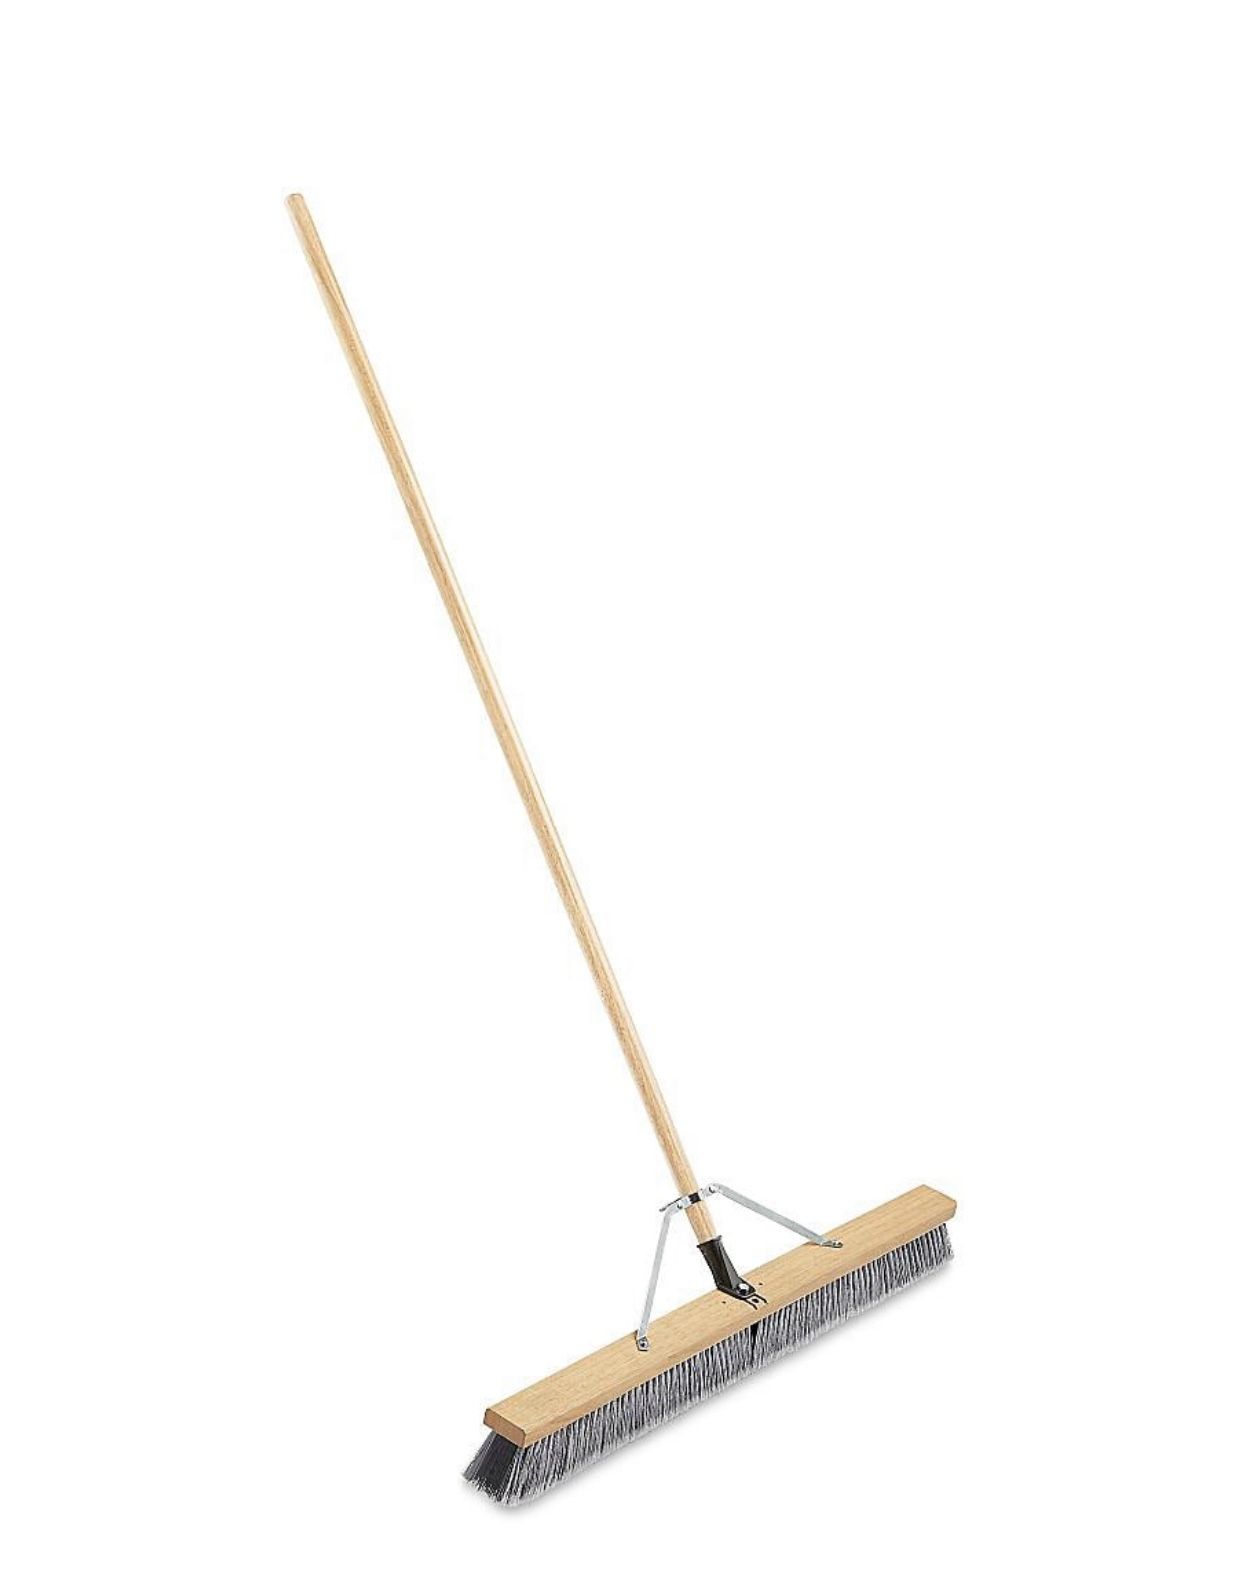 Contractor / push broom, ULINE, 36 inch